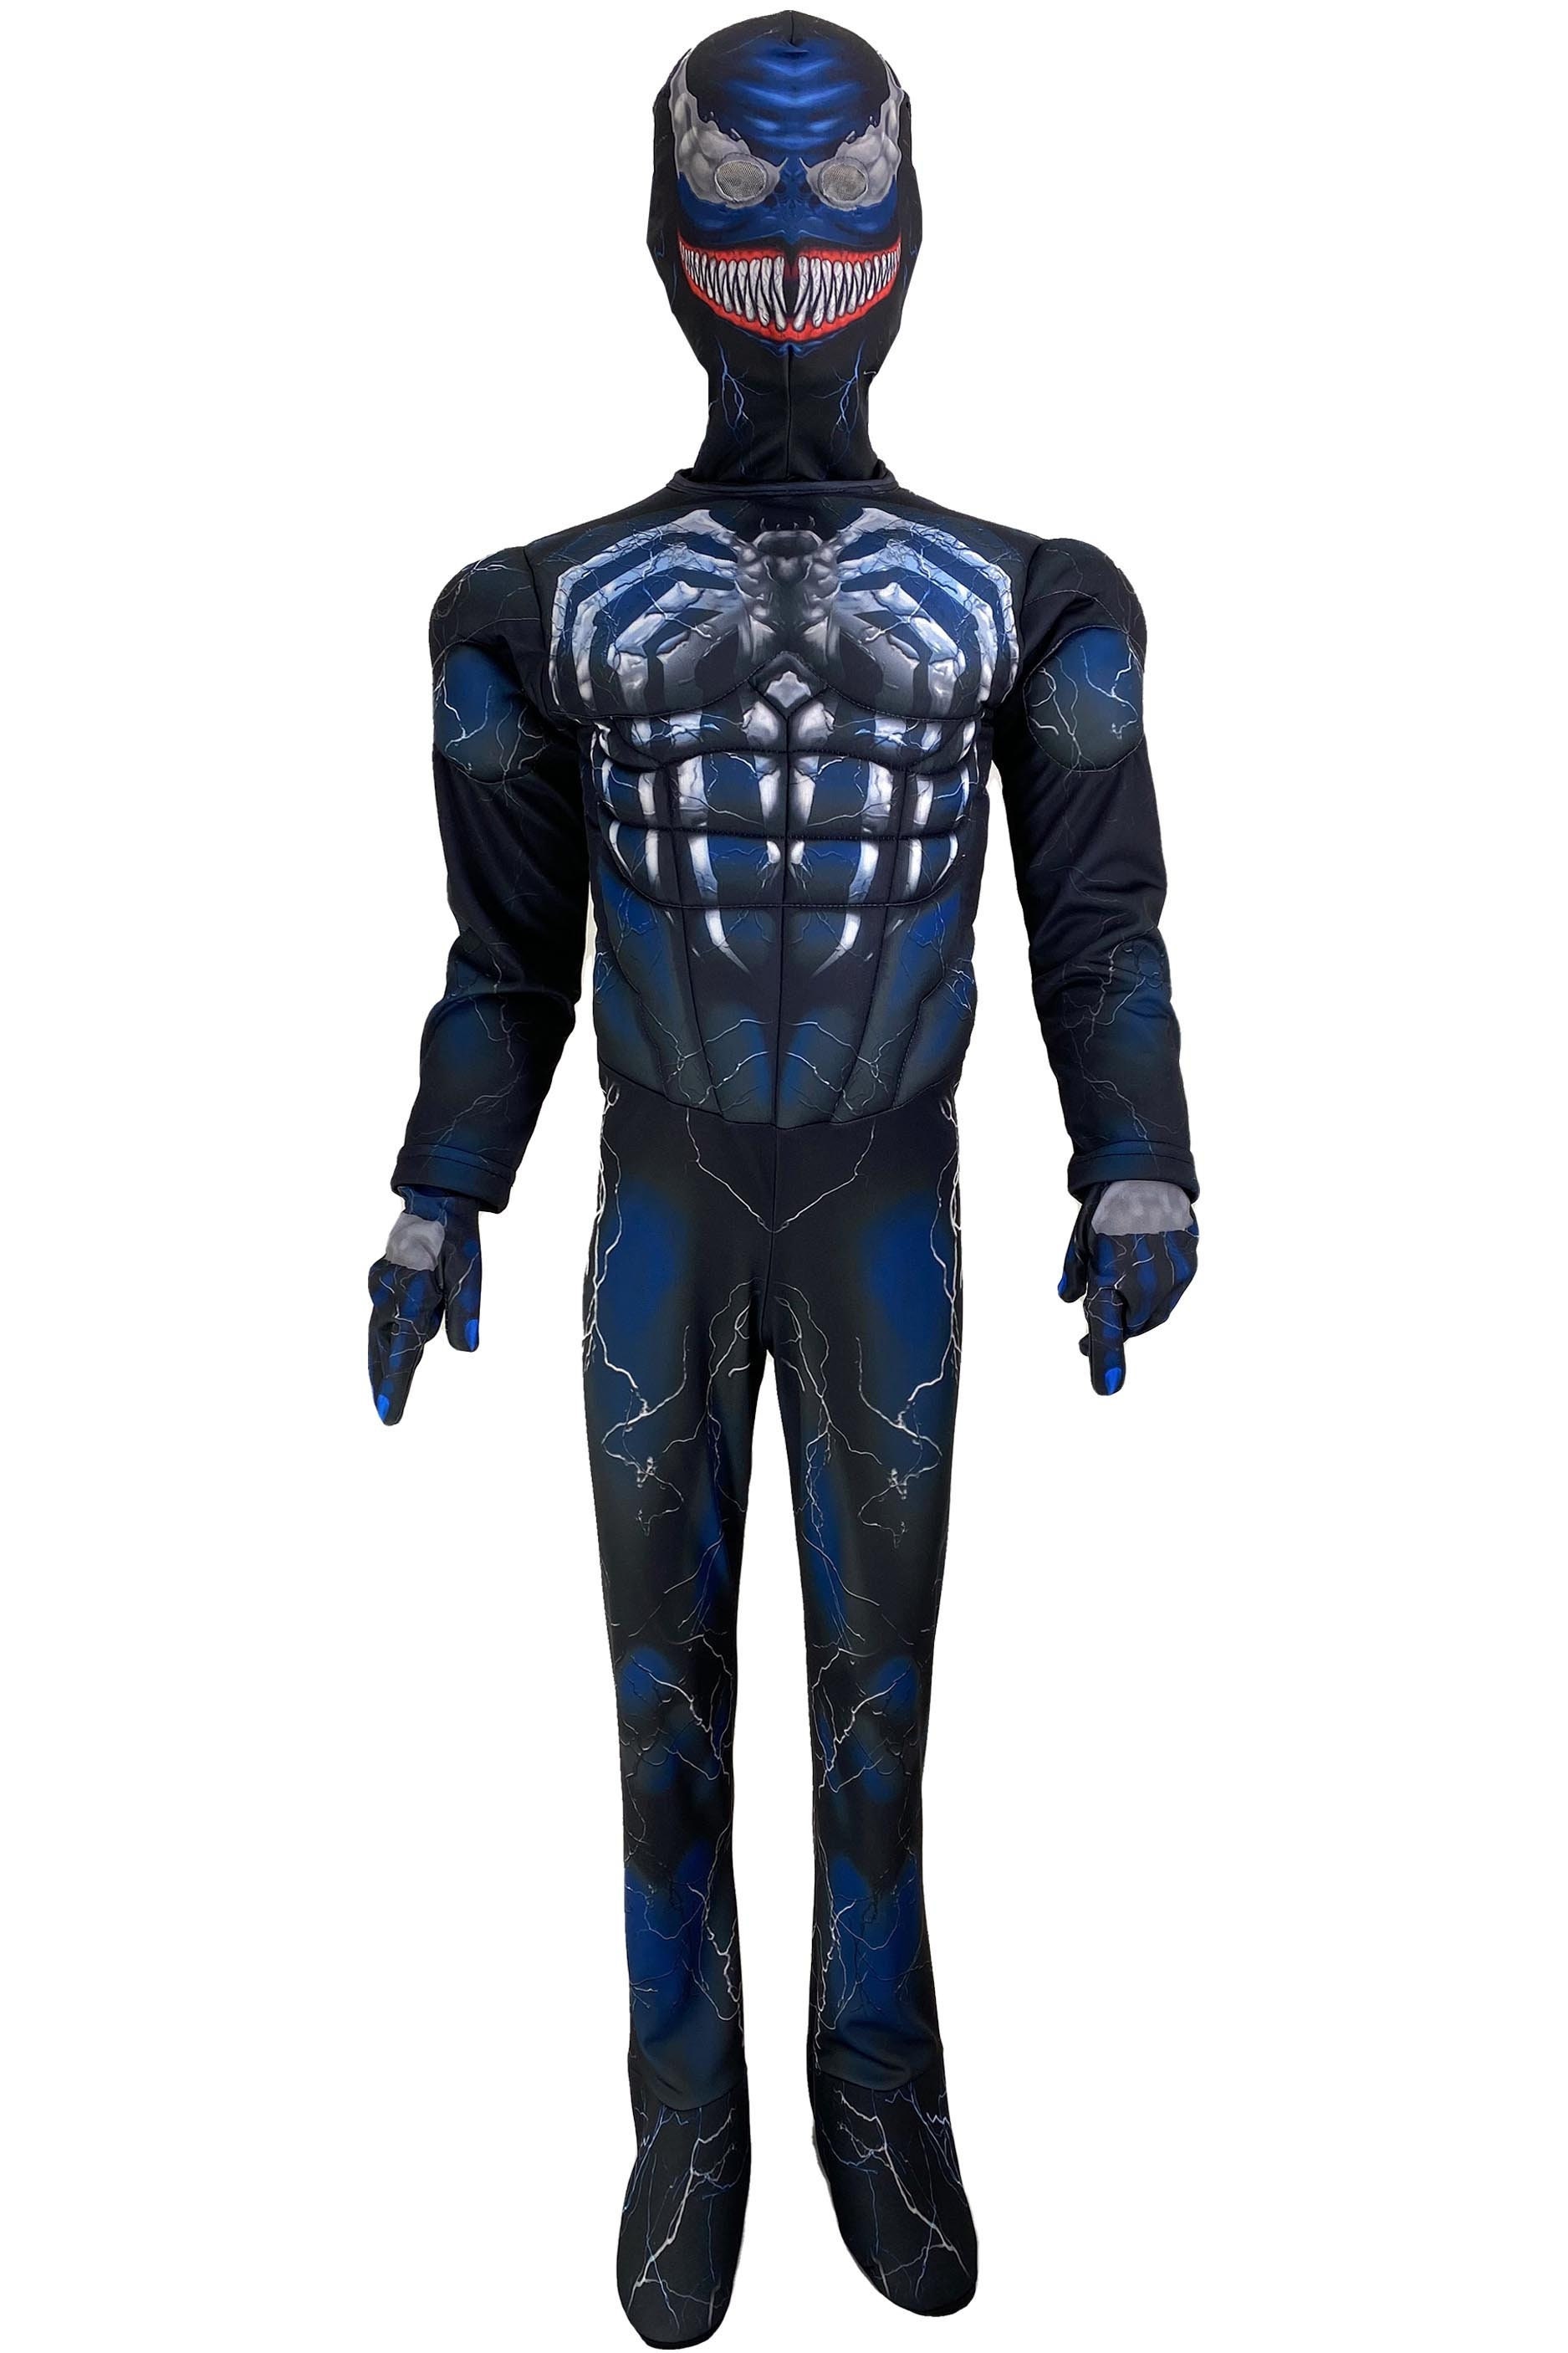 Buy Wraith of East Boys Venom Black Spiderman Costume Kids (Medium) Online  at Low Prices in India 